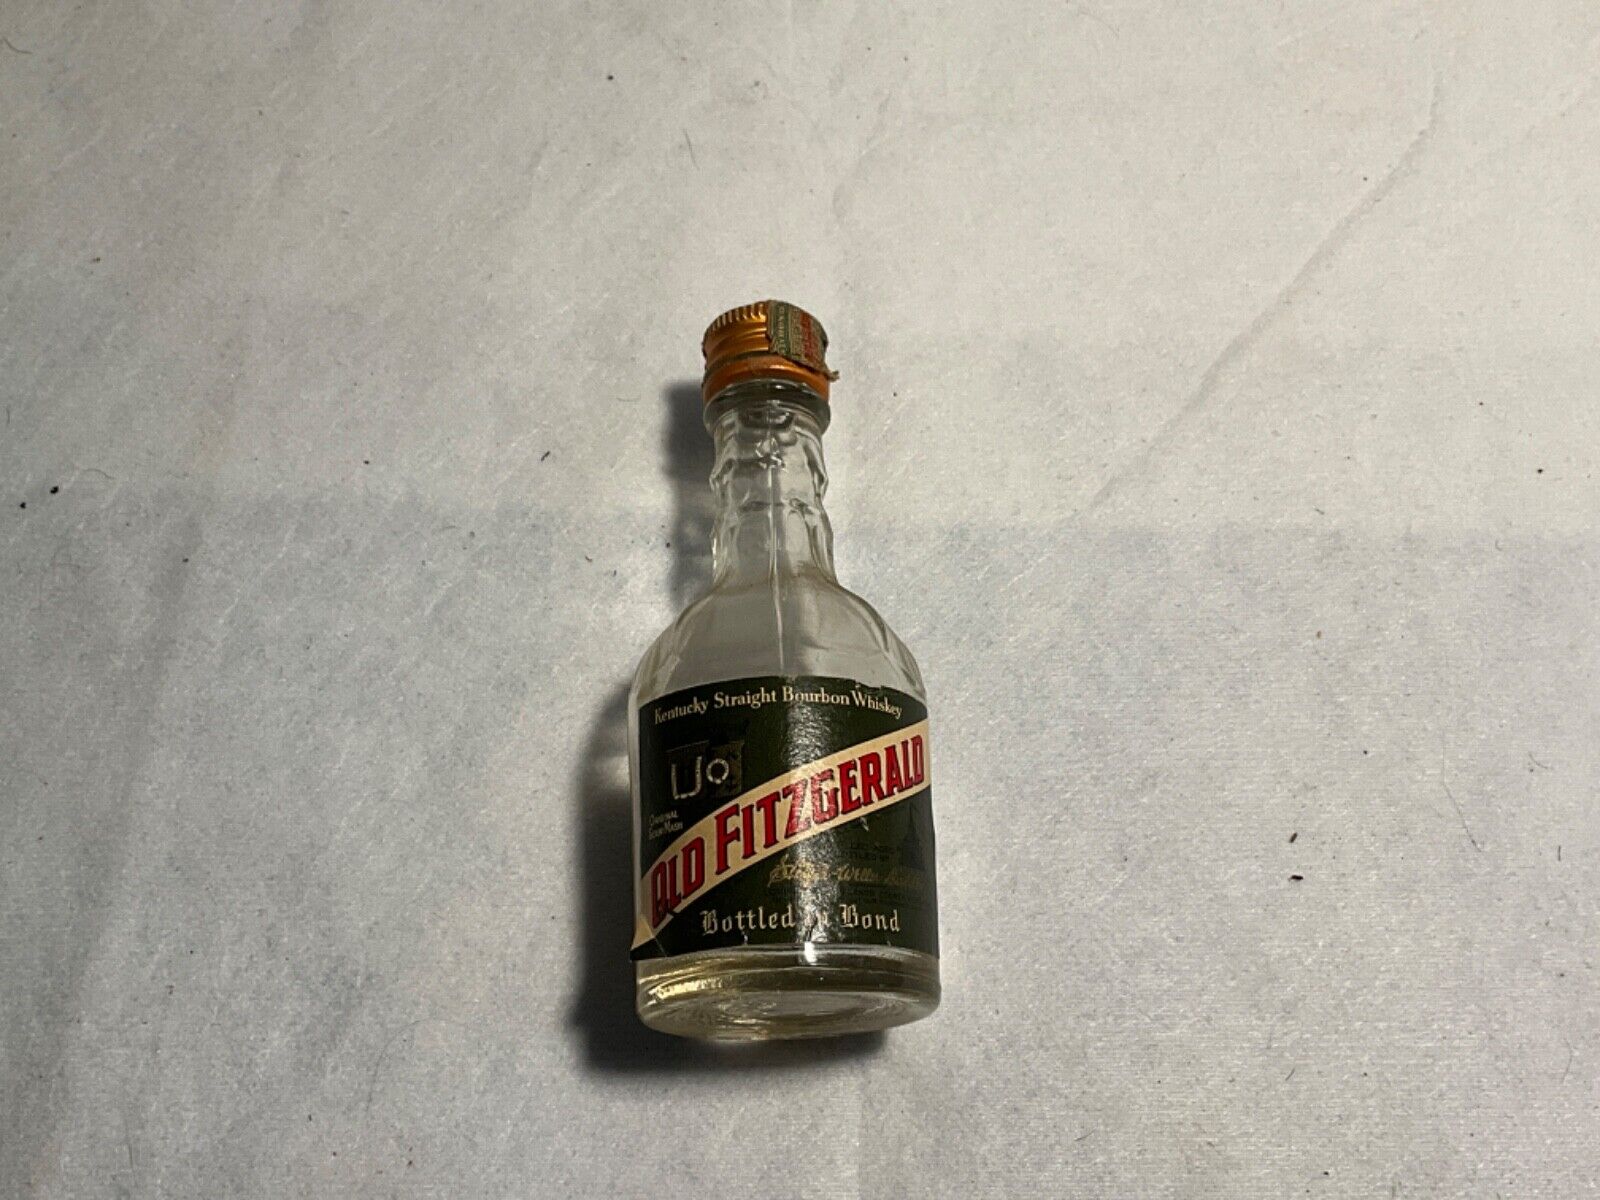 Vtg 1960s Era Old Fitzgerald Bourbon Whiskey 1/10 Pint 100-Proof BIB Mini Bottle